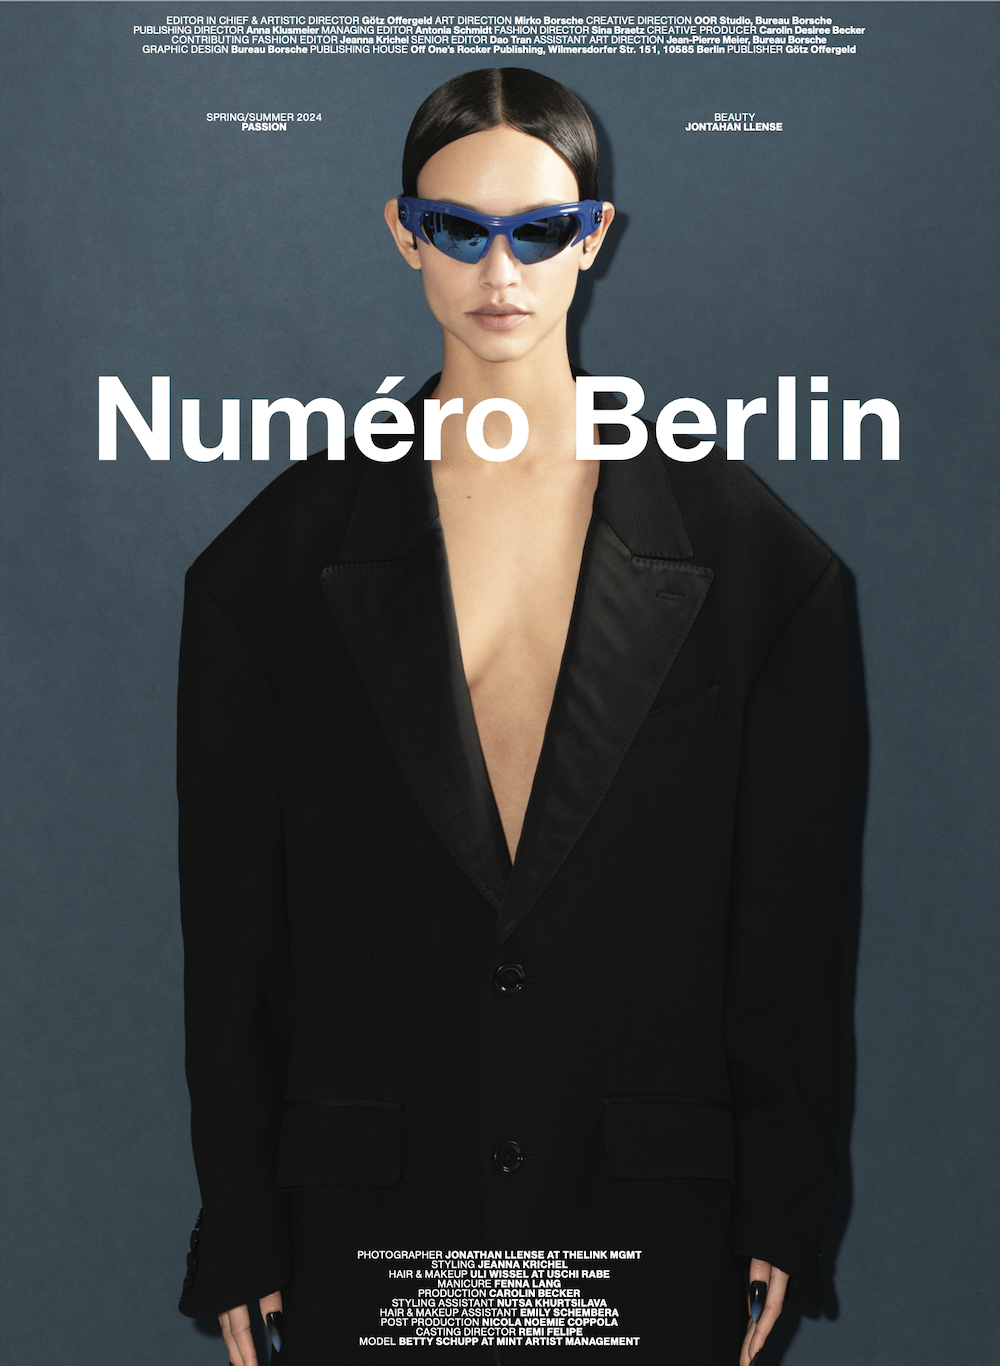 Numéro Berlin /w Jonathan Llense